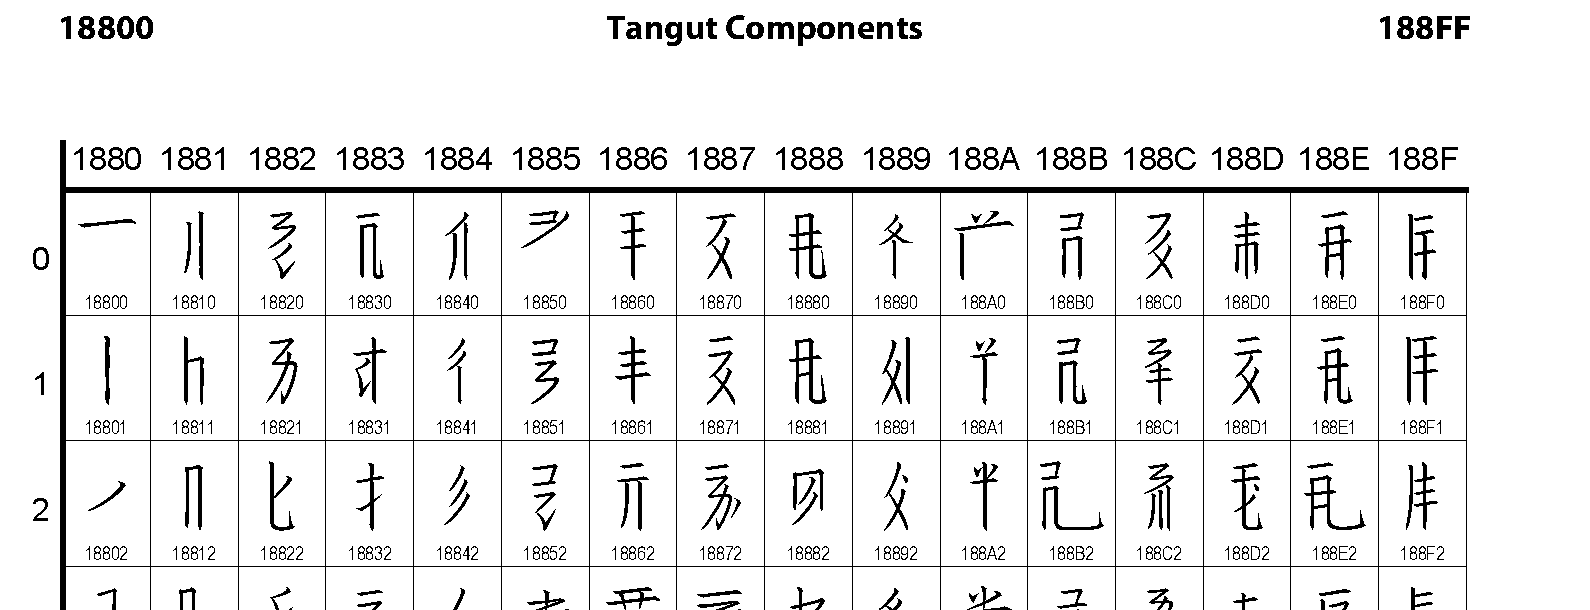 Unicode - Tangut Components